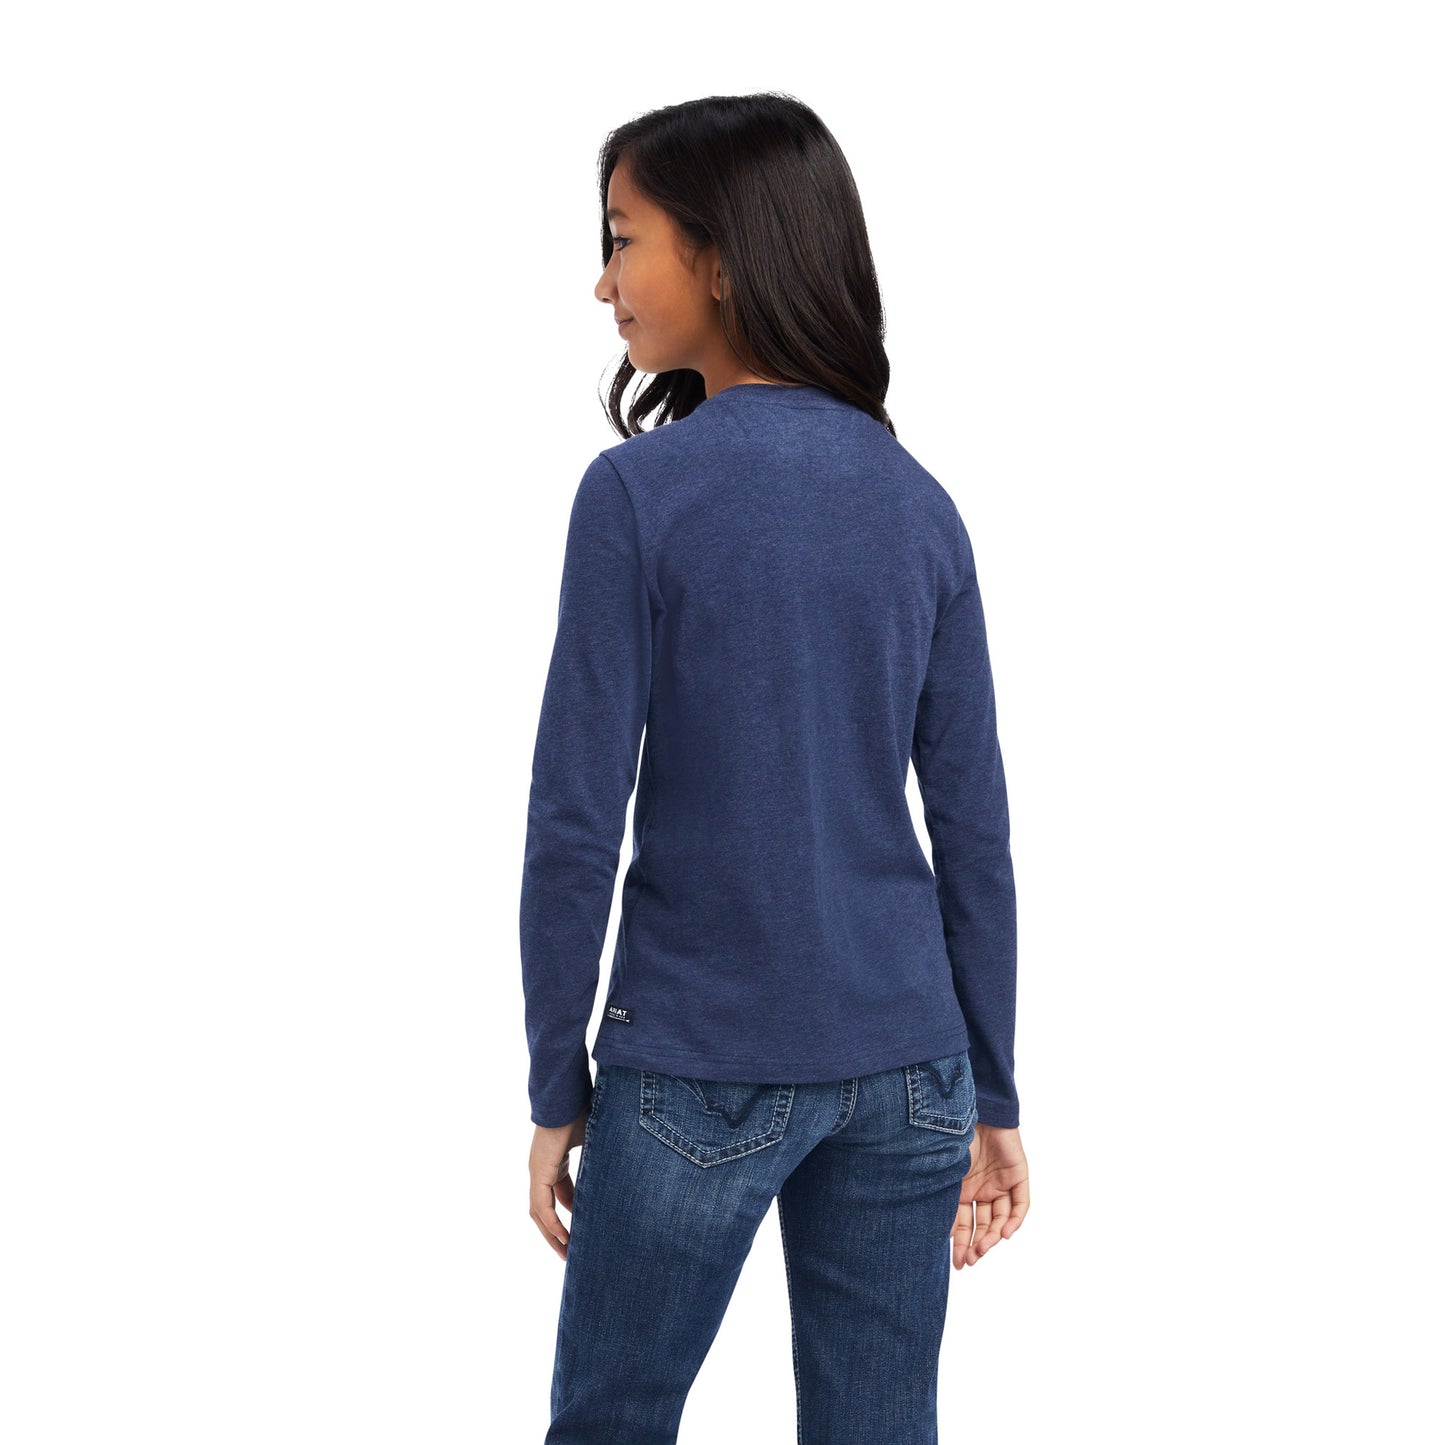 Ariat® Youth Girl's Fan Club Long Sleeve Navy Heather T-shirt 10041252